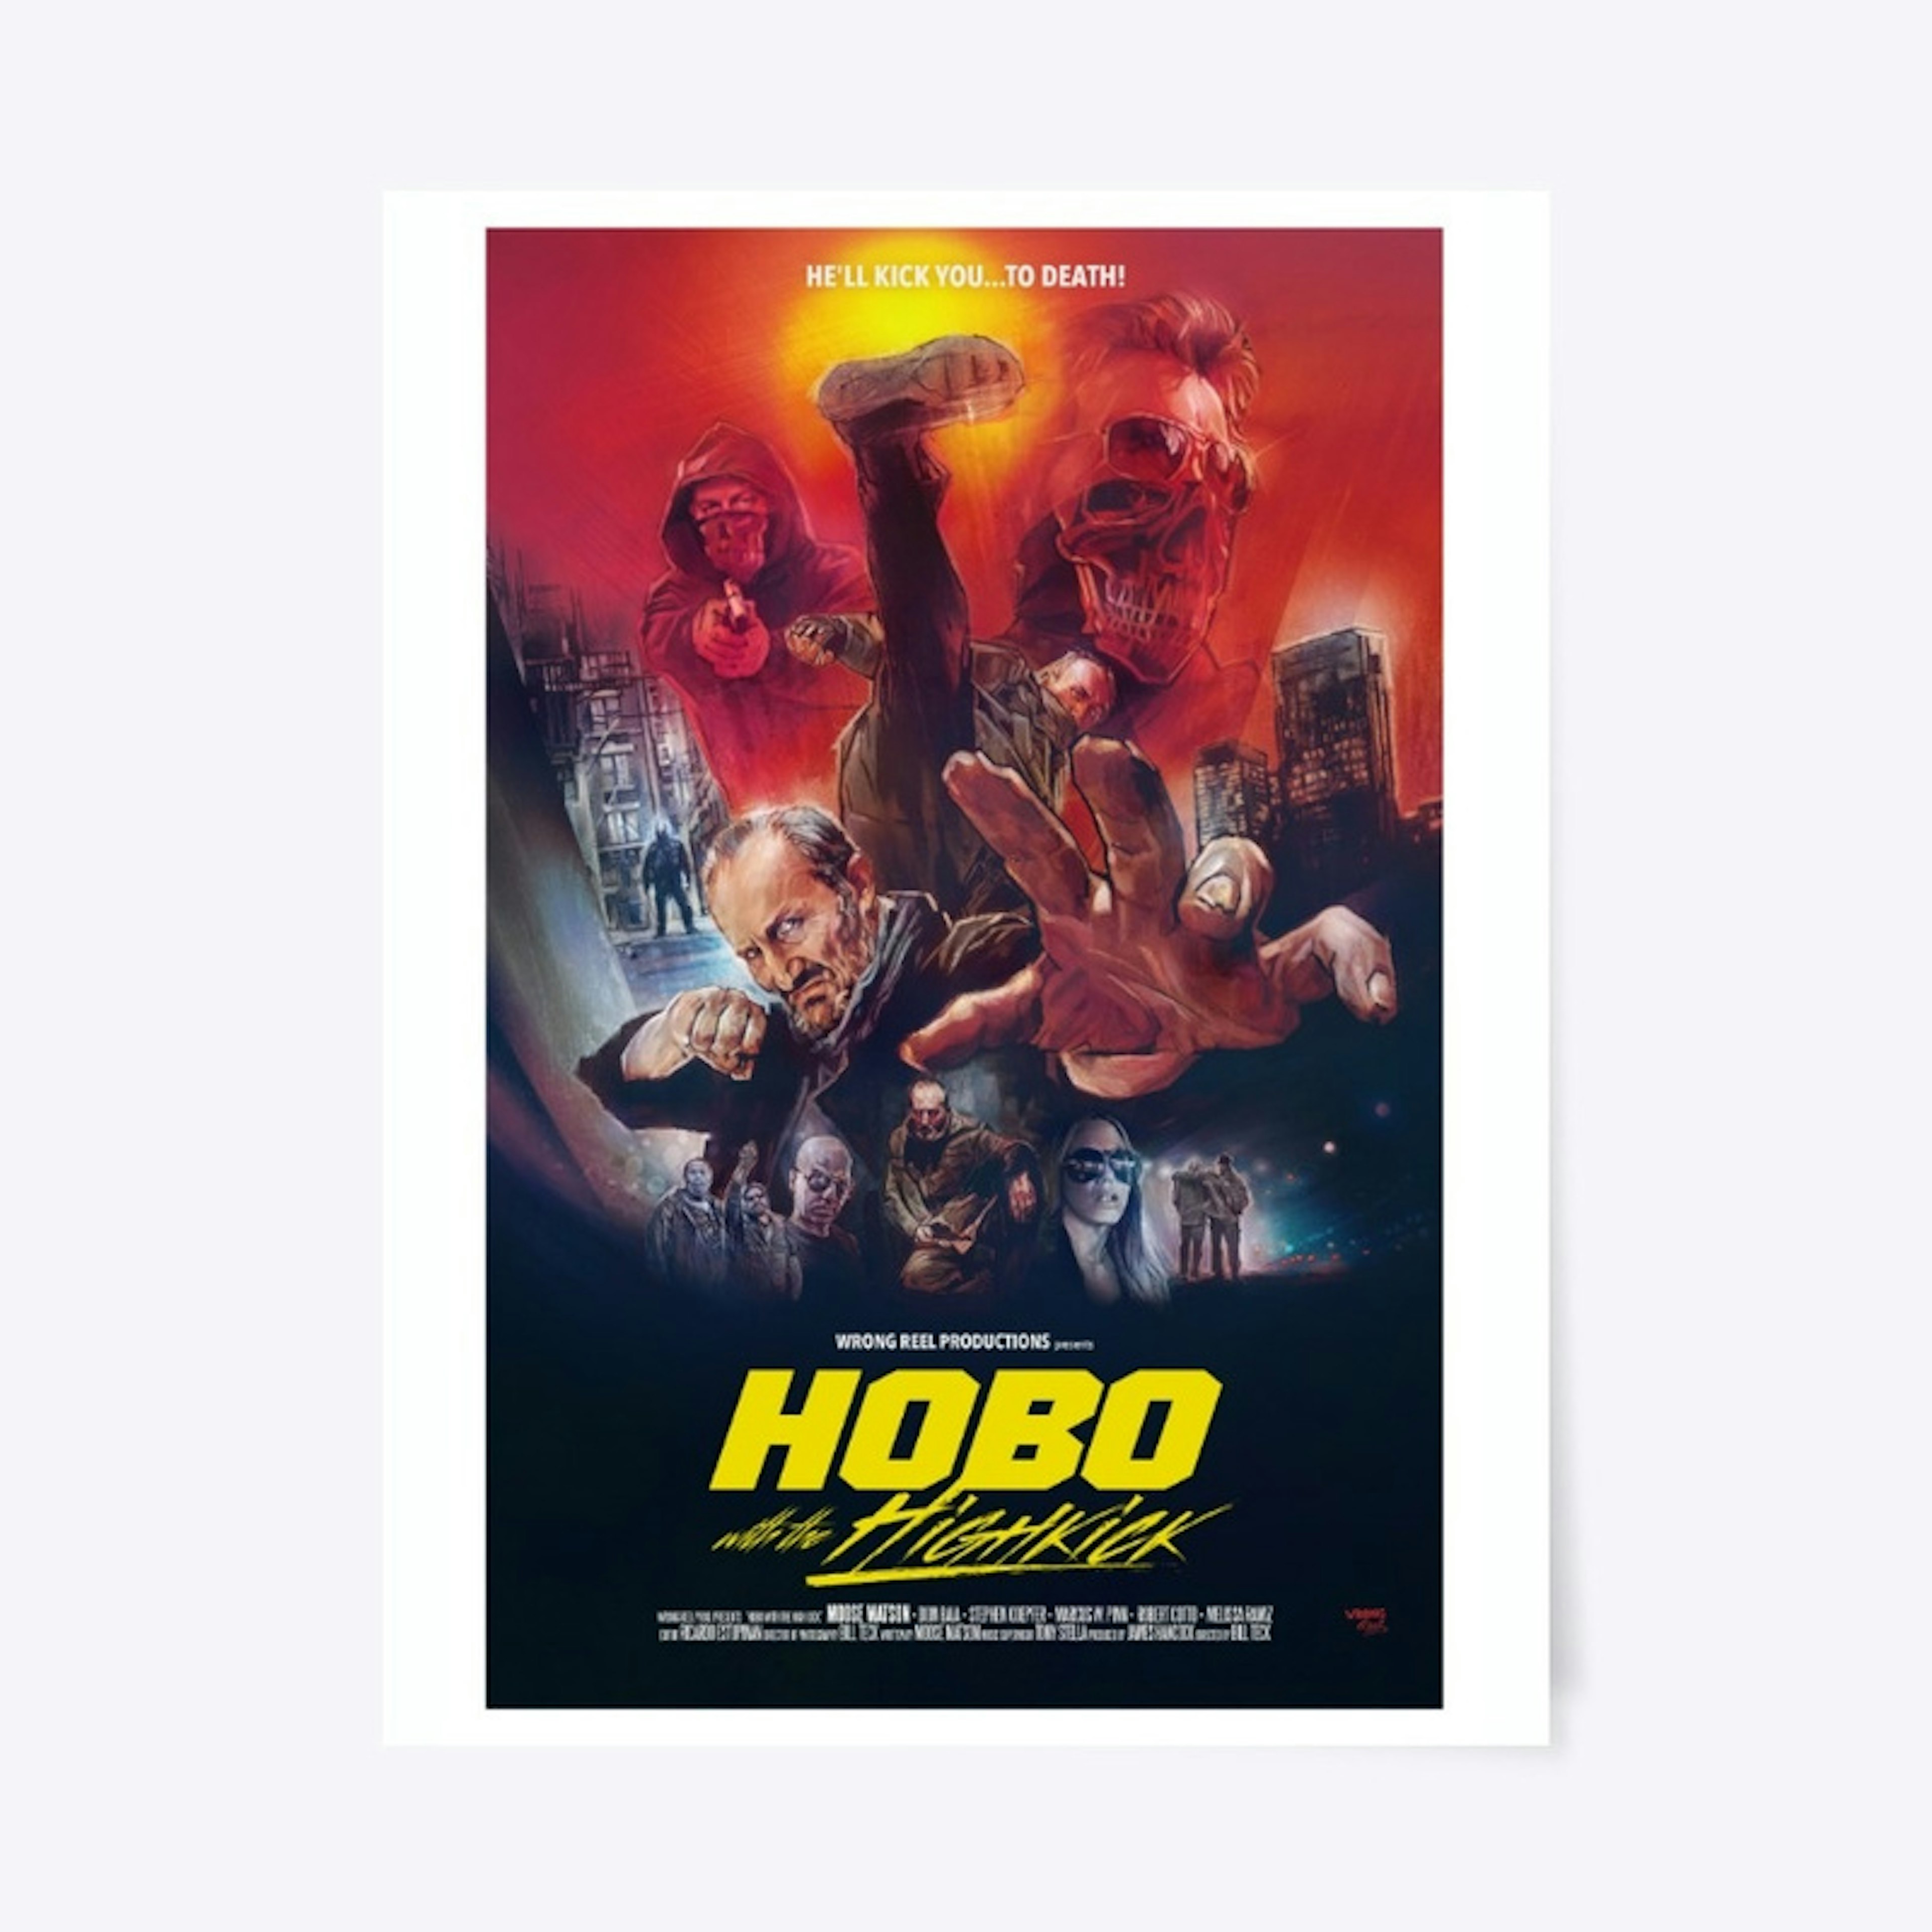 Hobo with the High Kick Poster